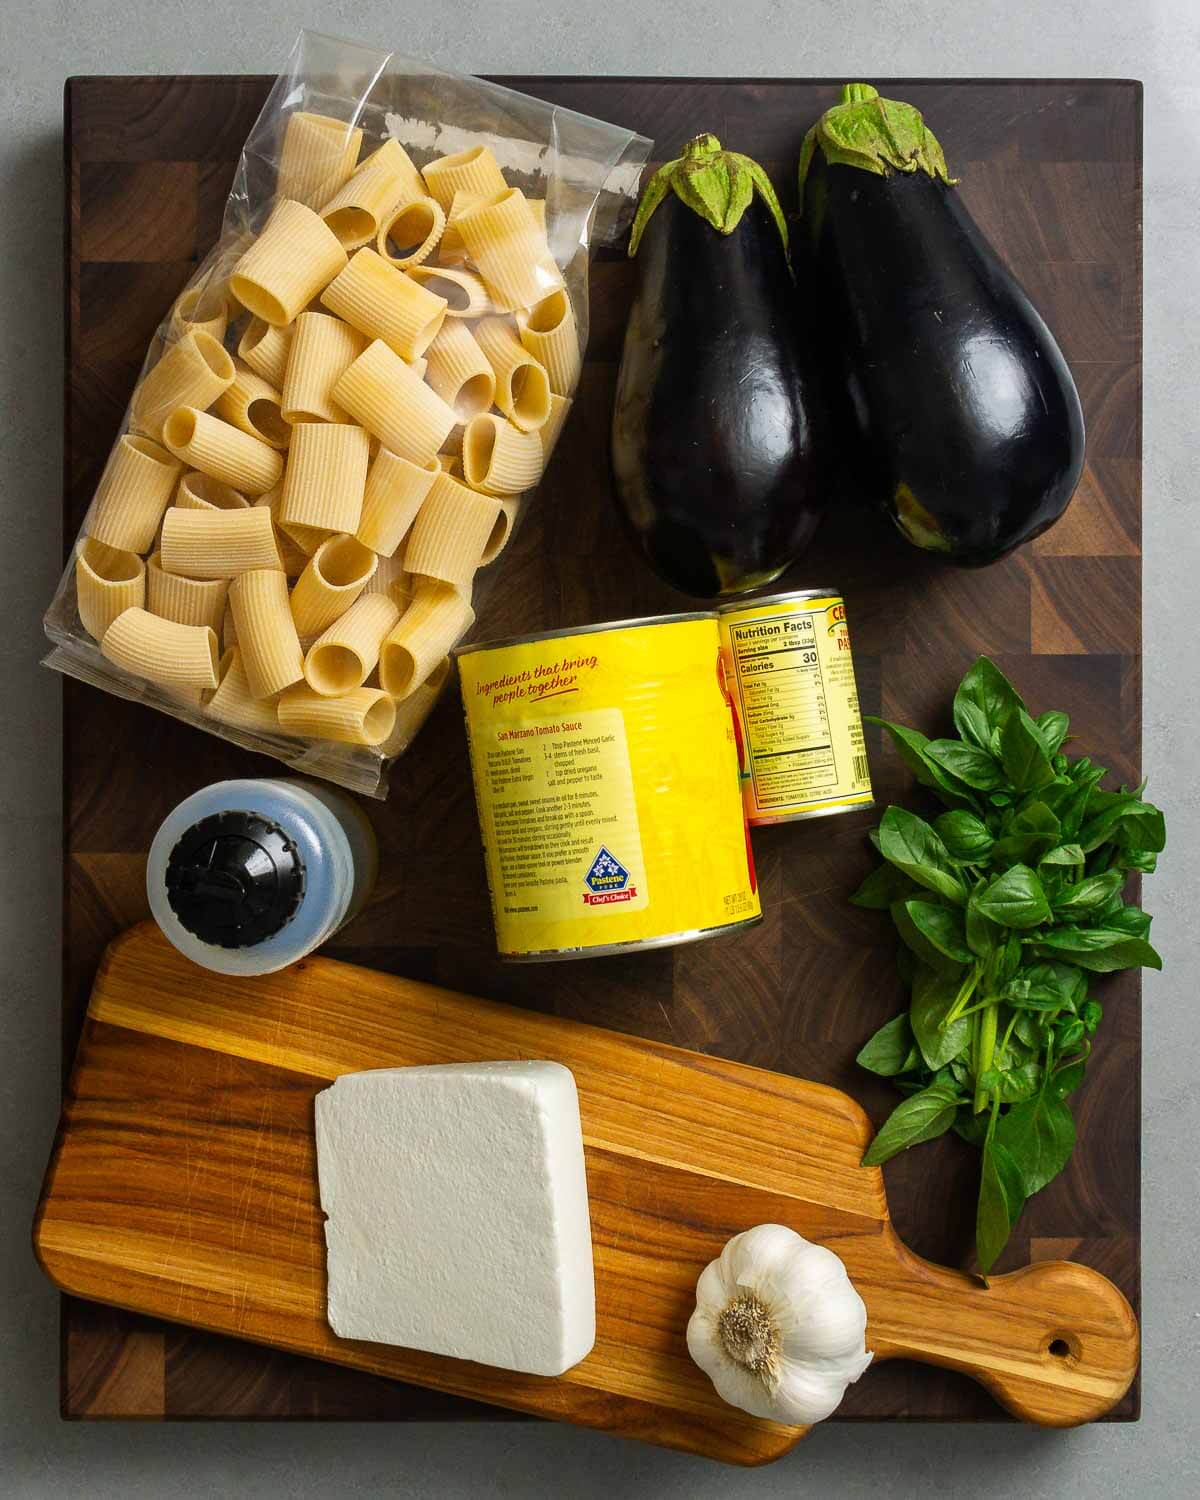 Ingredients shown: pasta, eggplants, extra virgin olive oil, plum tomatoes and tomato paste, basil, ricotta salata, and garlic.